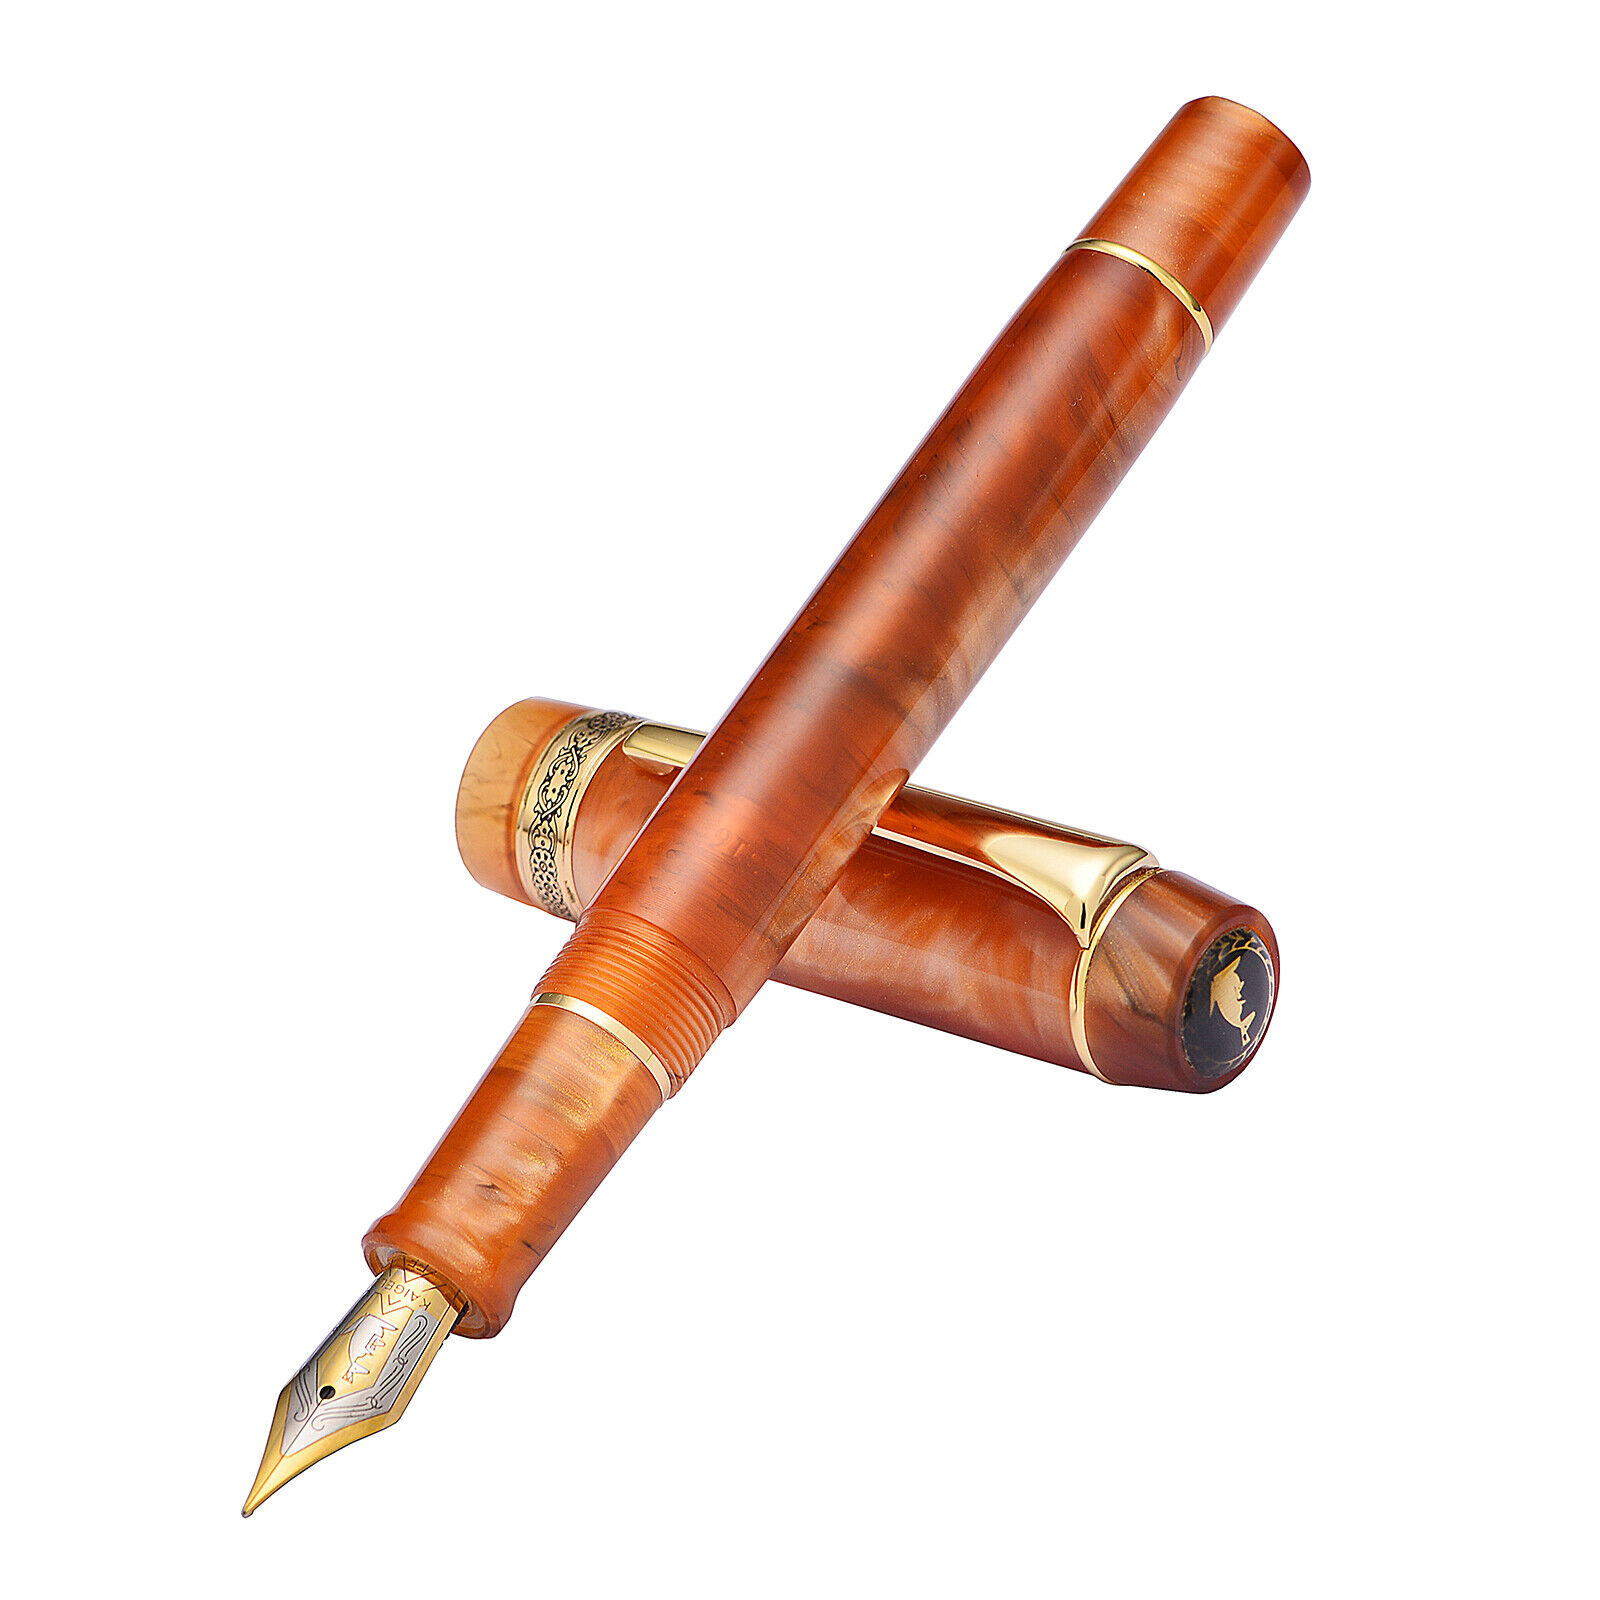 Kaigelu 316A Celluloid Fountain Pen, Iridium EF/F/M Nib Beautiful Brown Gift Pen